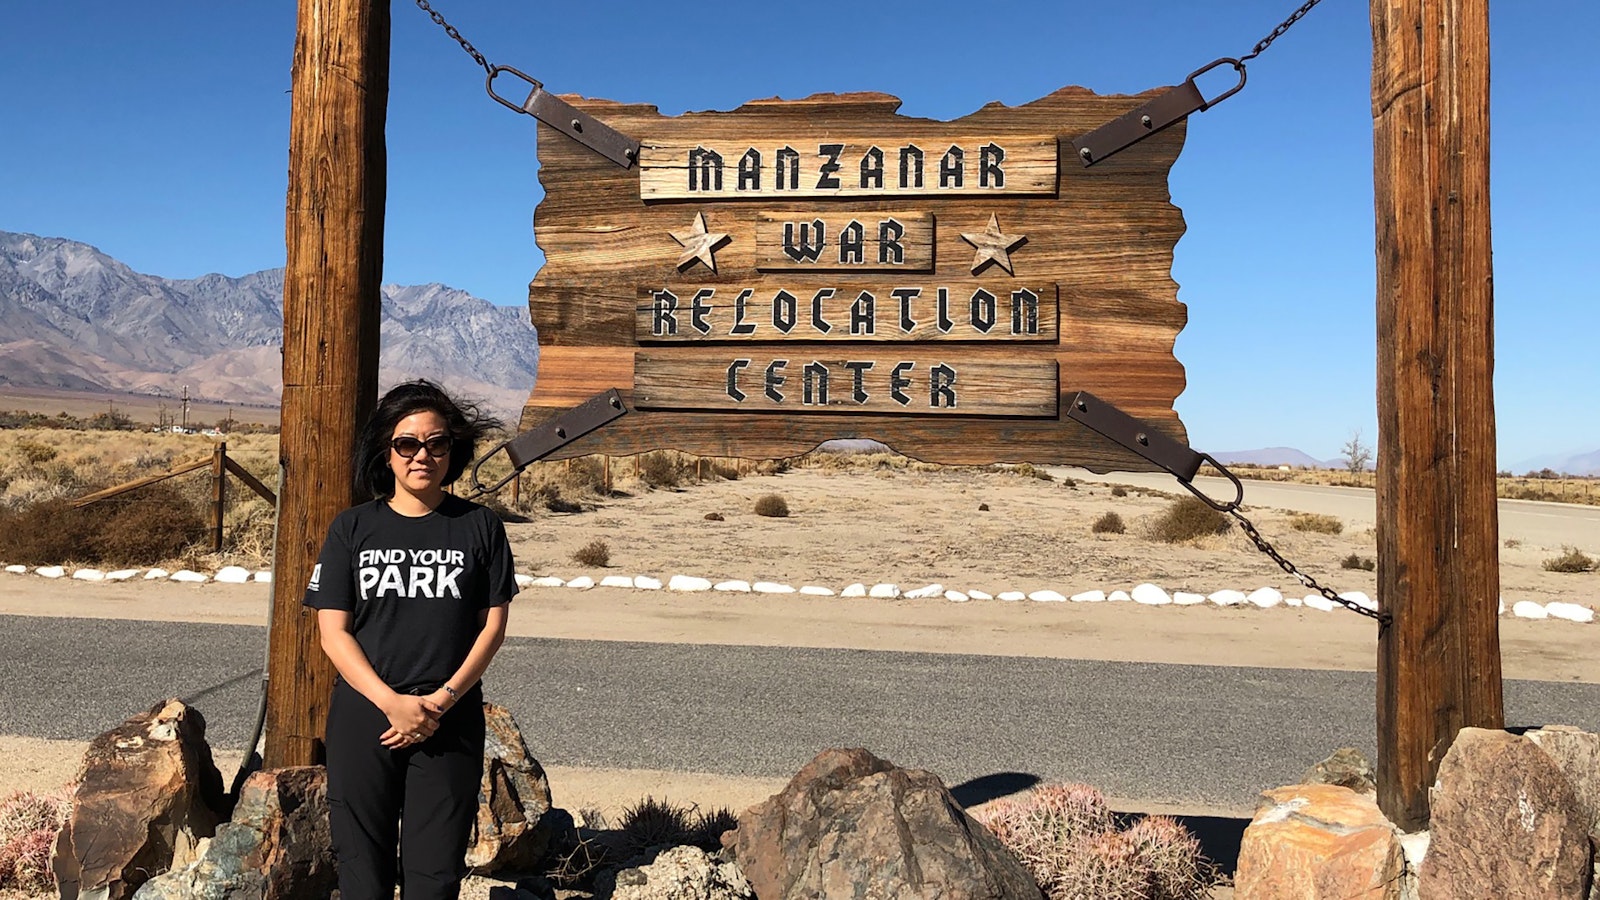 Kim stands next to a sign that reads "Manzanar War Relocation Center"